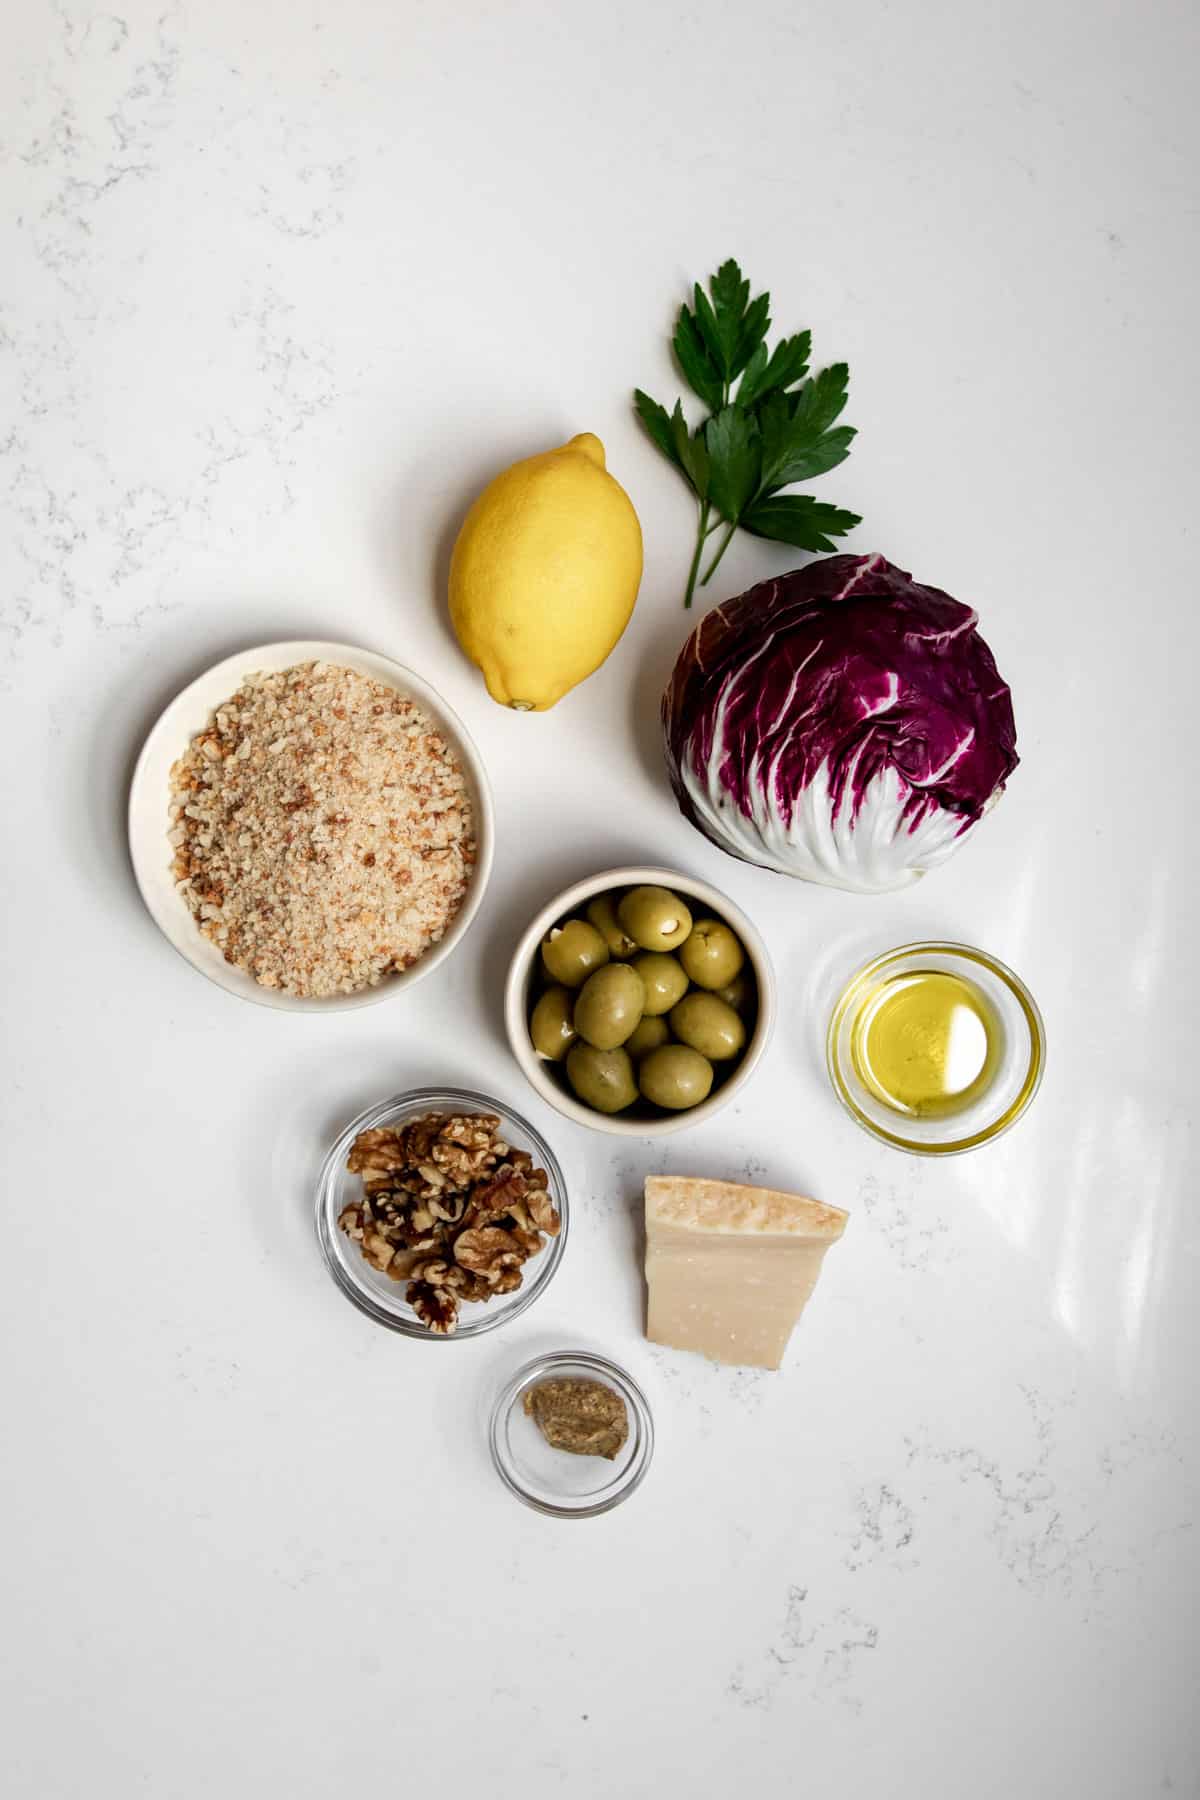 Ingredients needed to make Radicchio Salad with Lemon Parmesan Dressing arranged on table.